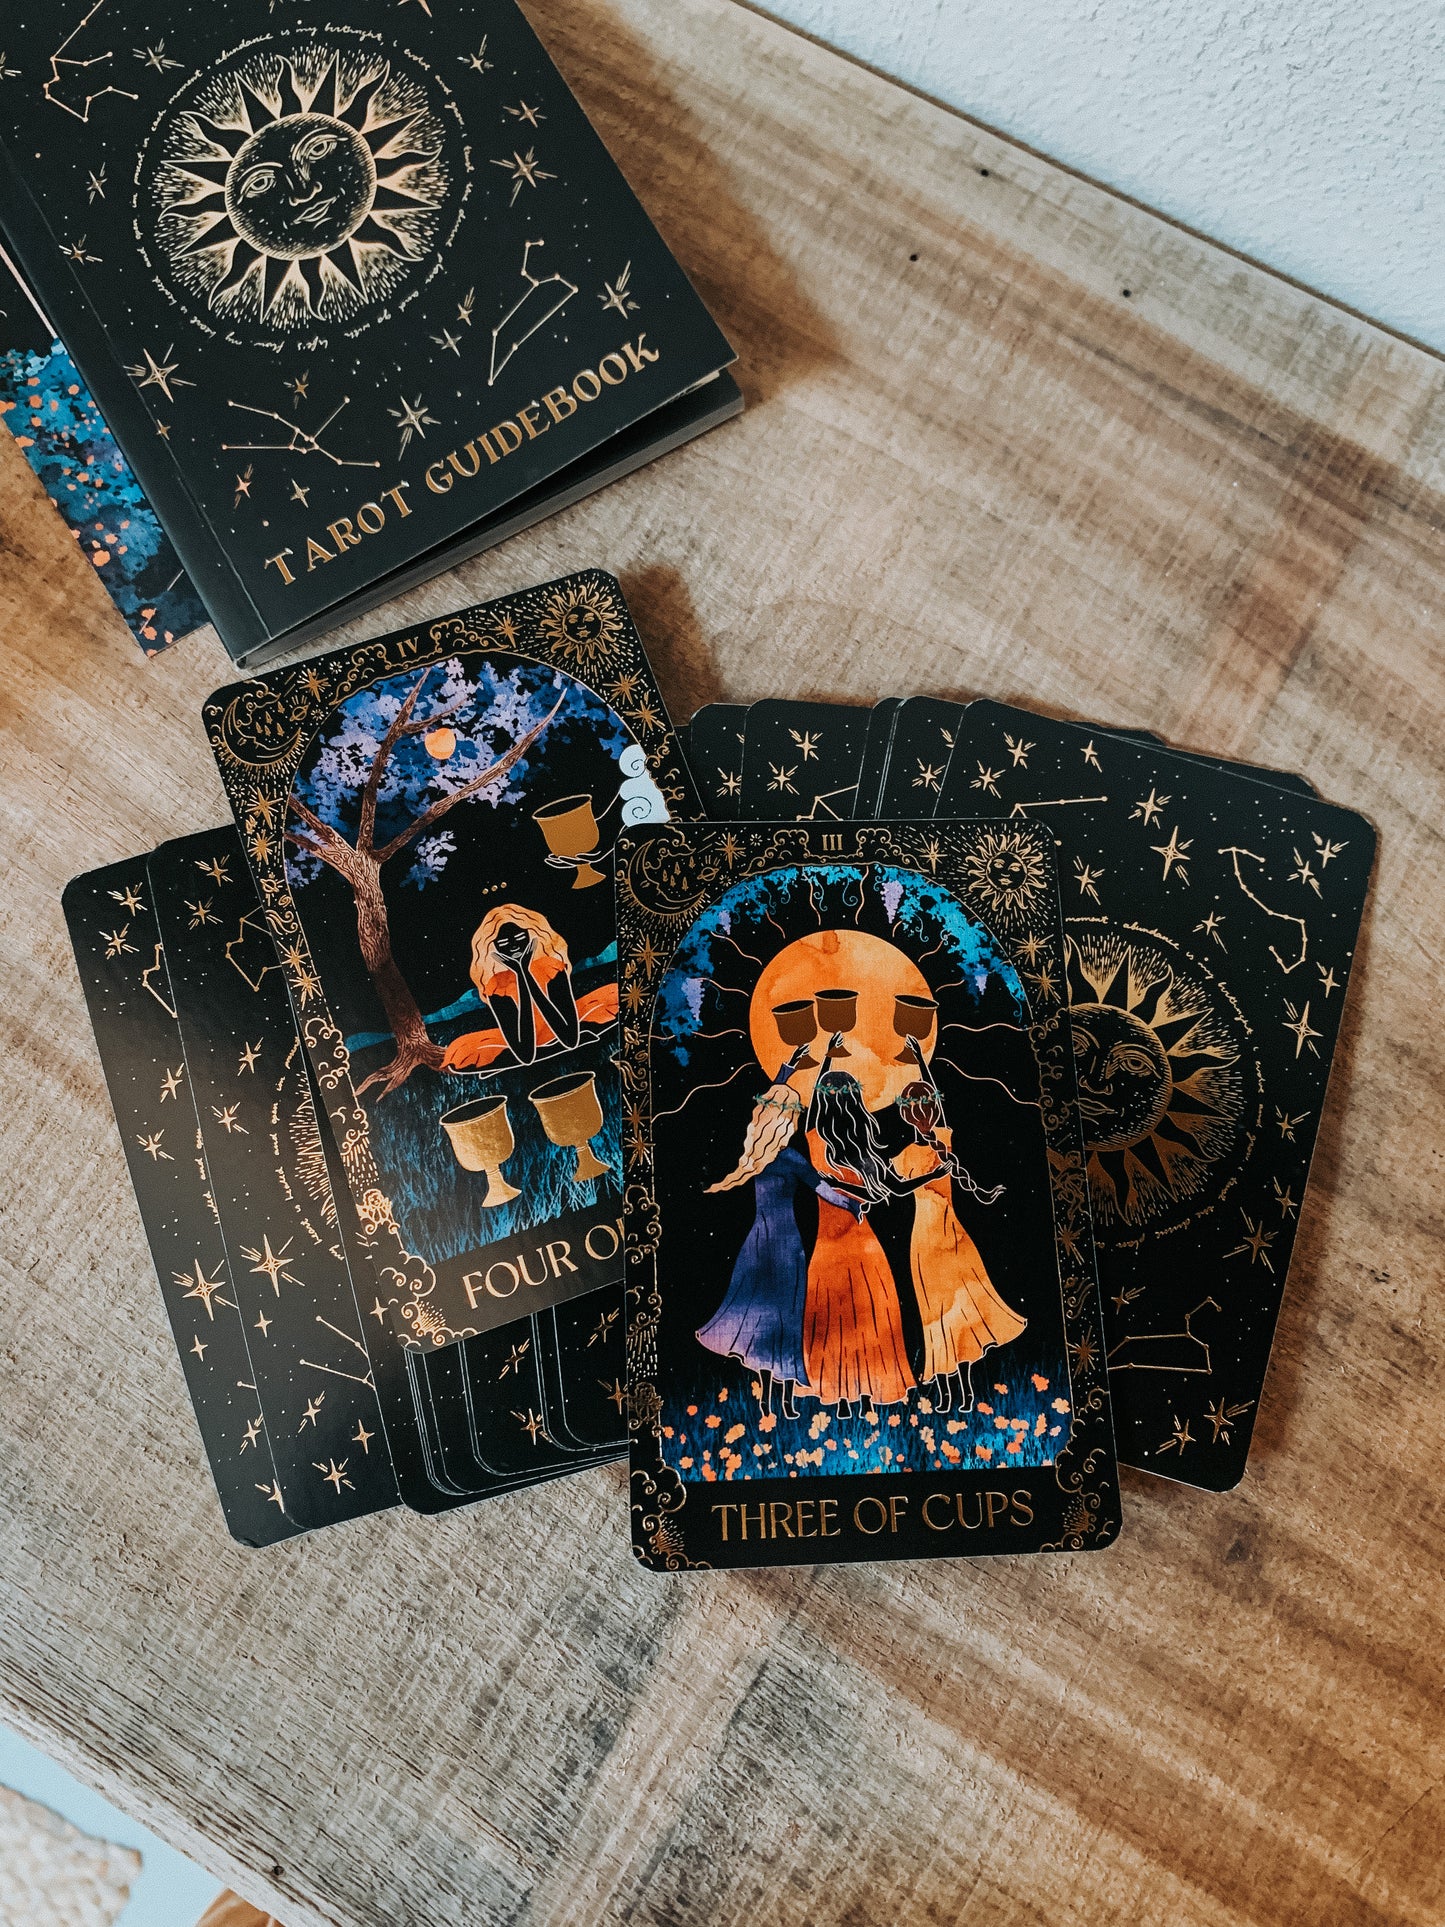 Tarot Cards, Dreamy Moons